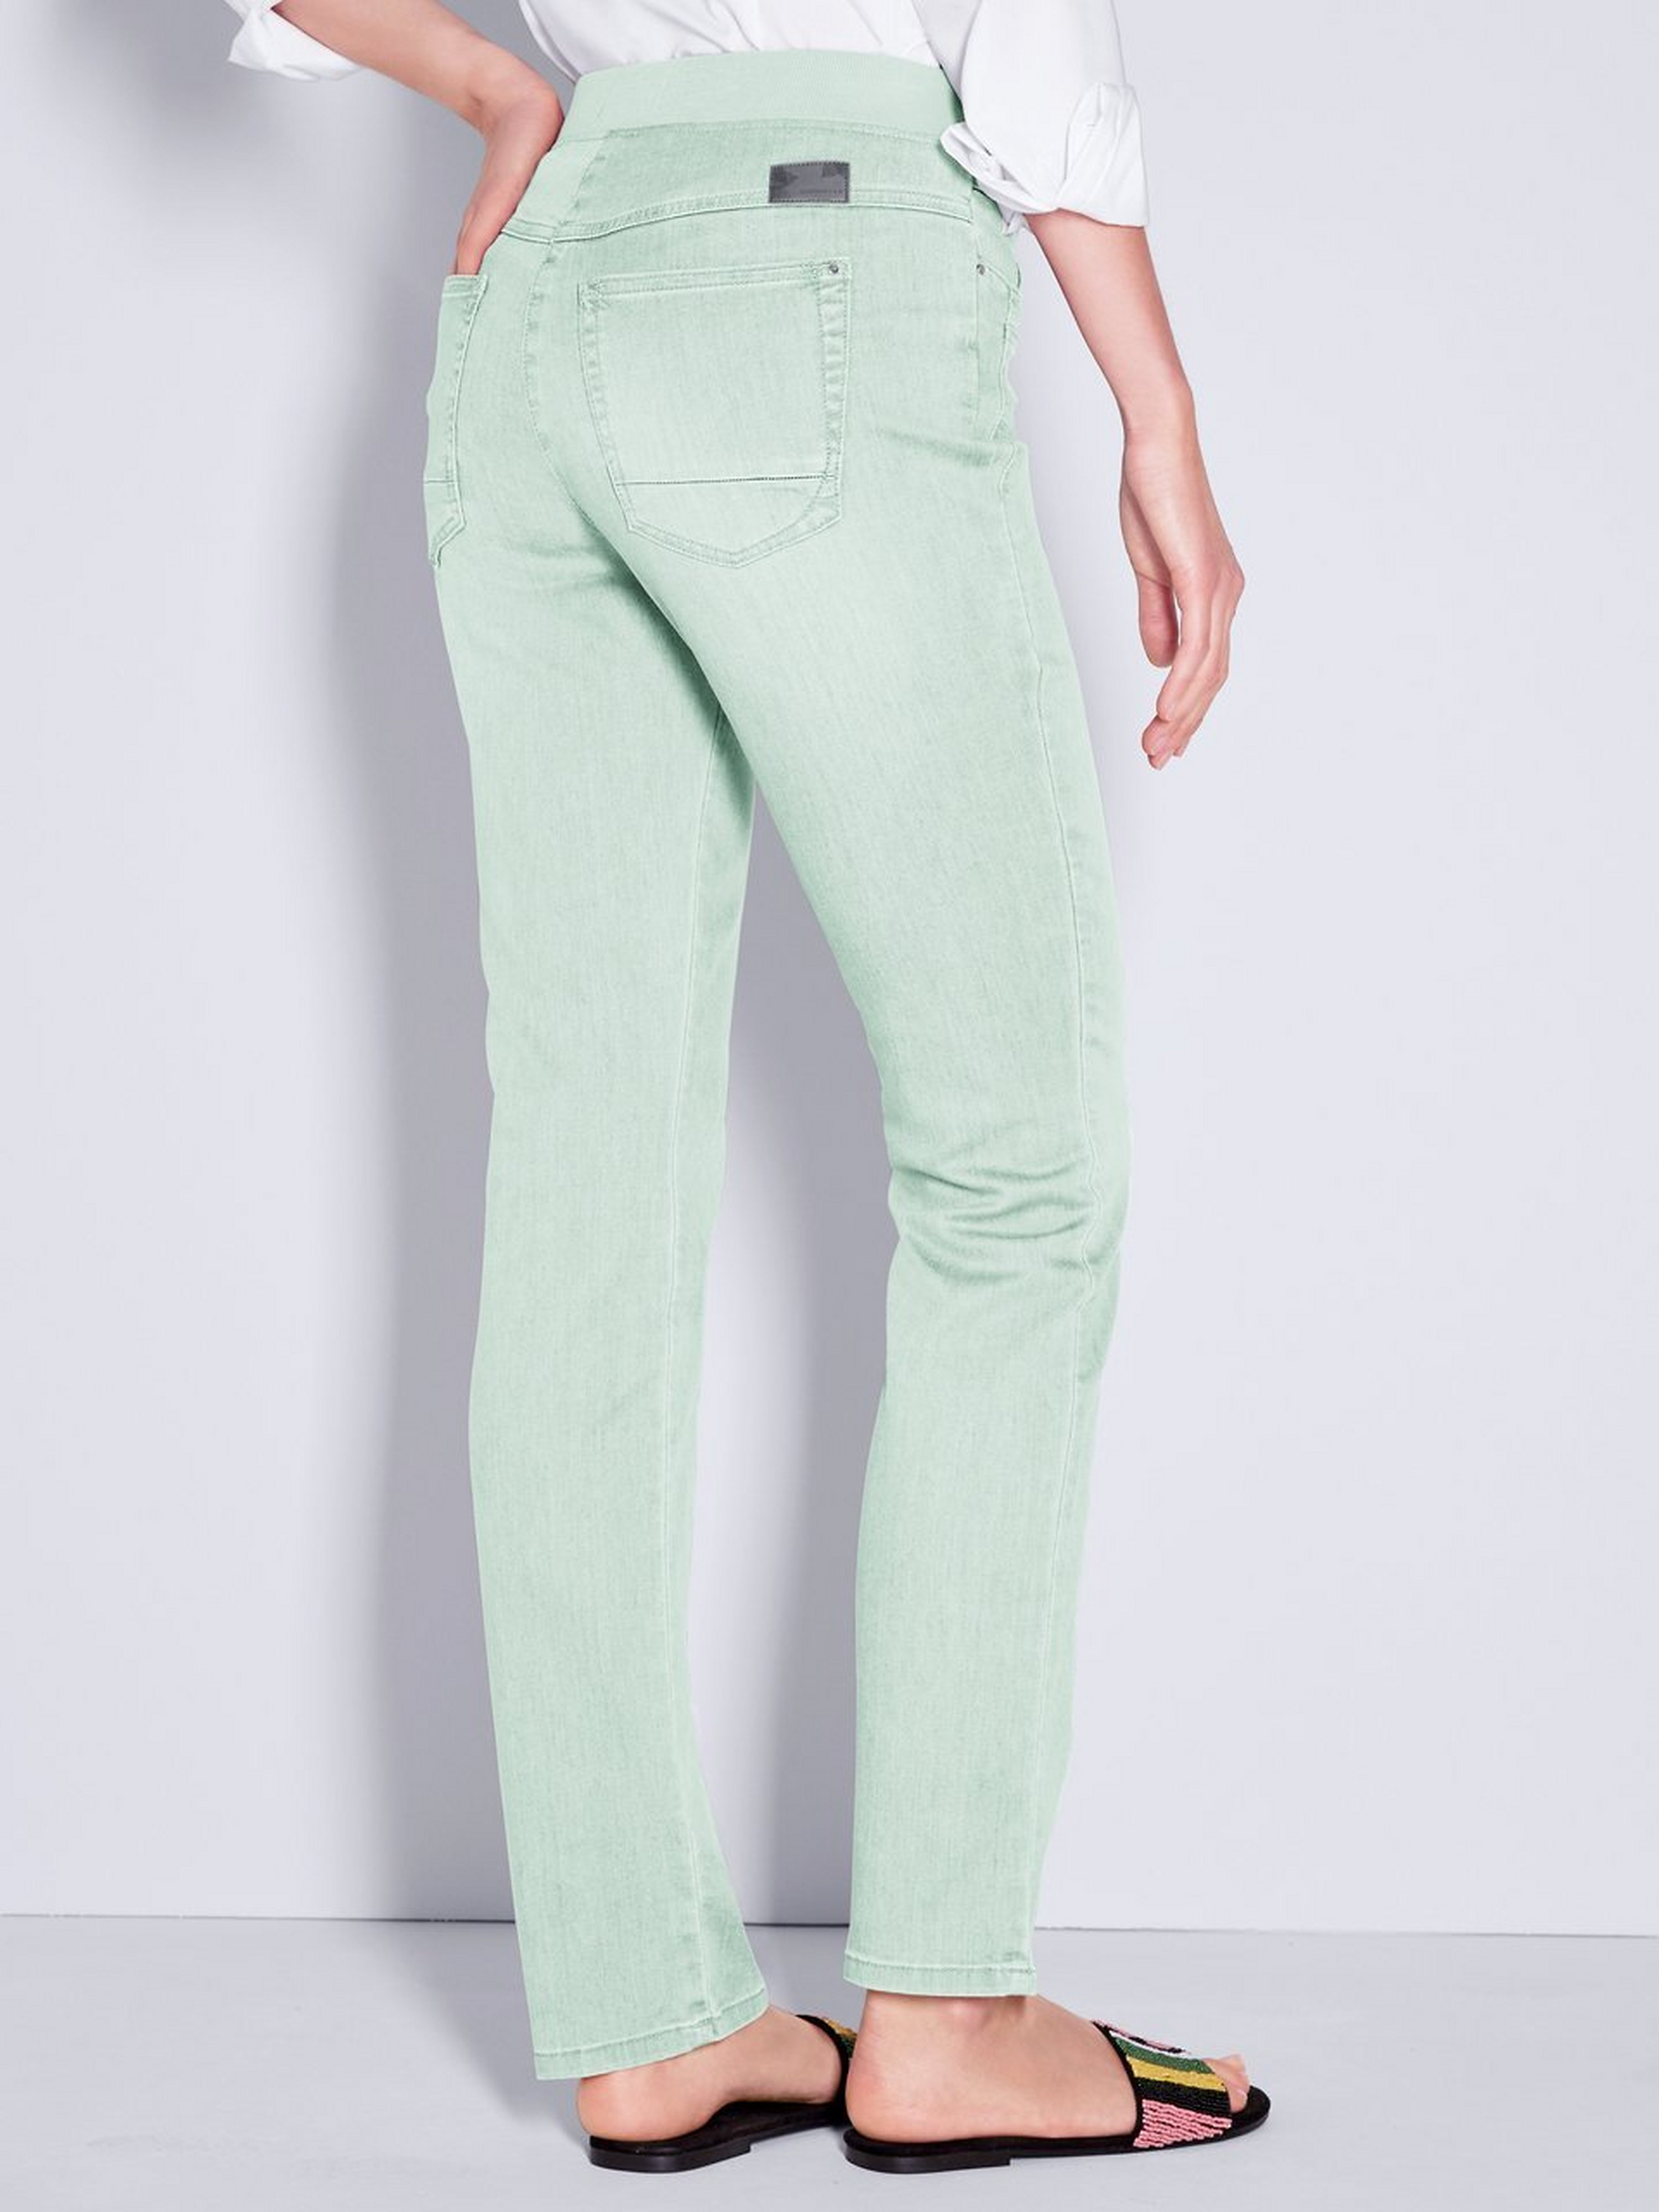 Jeans Van Raphaela by Brax groen